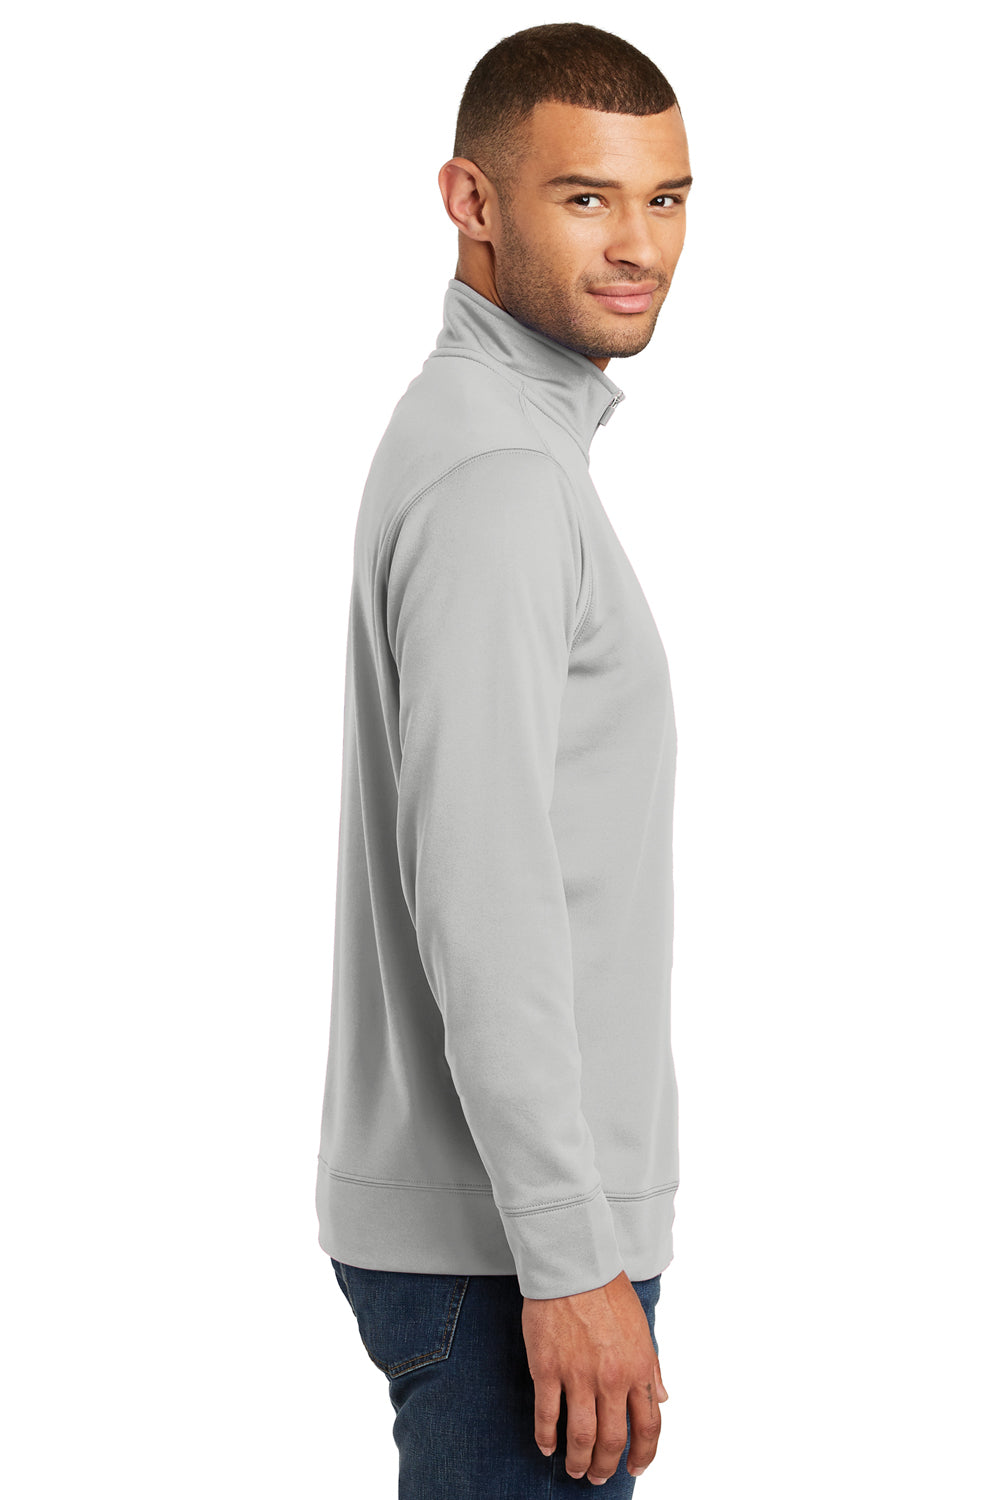 Port & Company PC590Q Mens Dry Zone Performance Moisture Wicking Fleece 1/4 Zip Sweatshirt Silver Grey Side